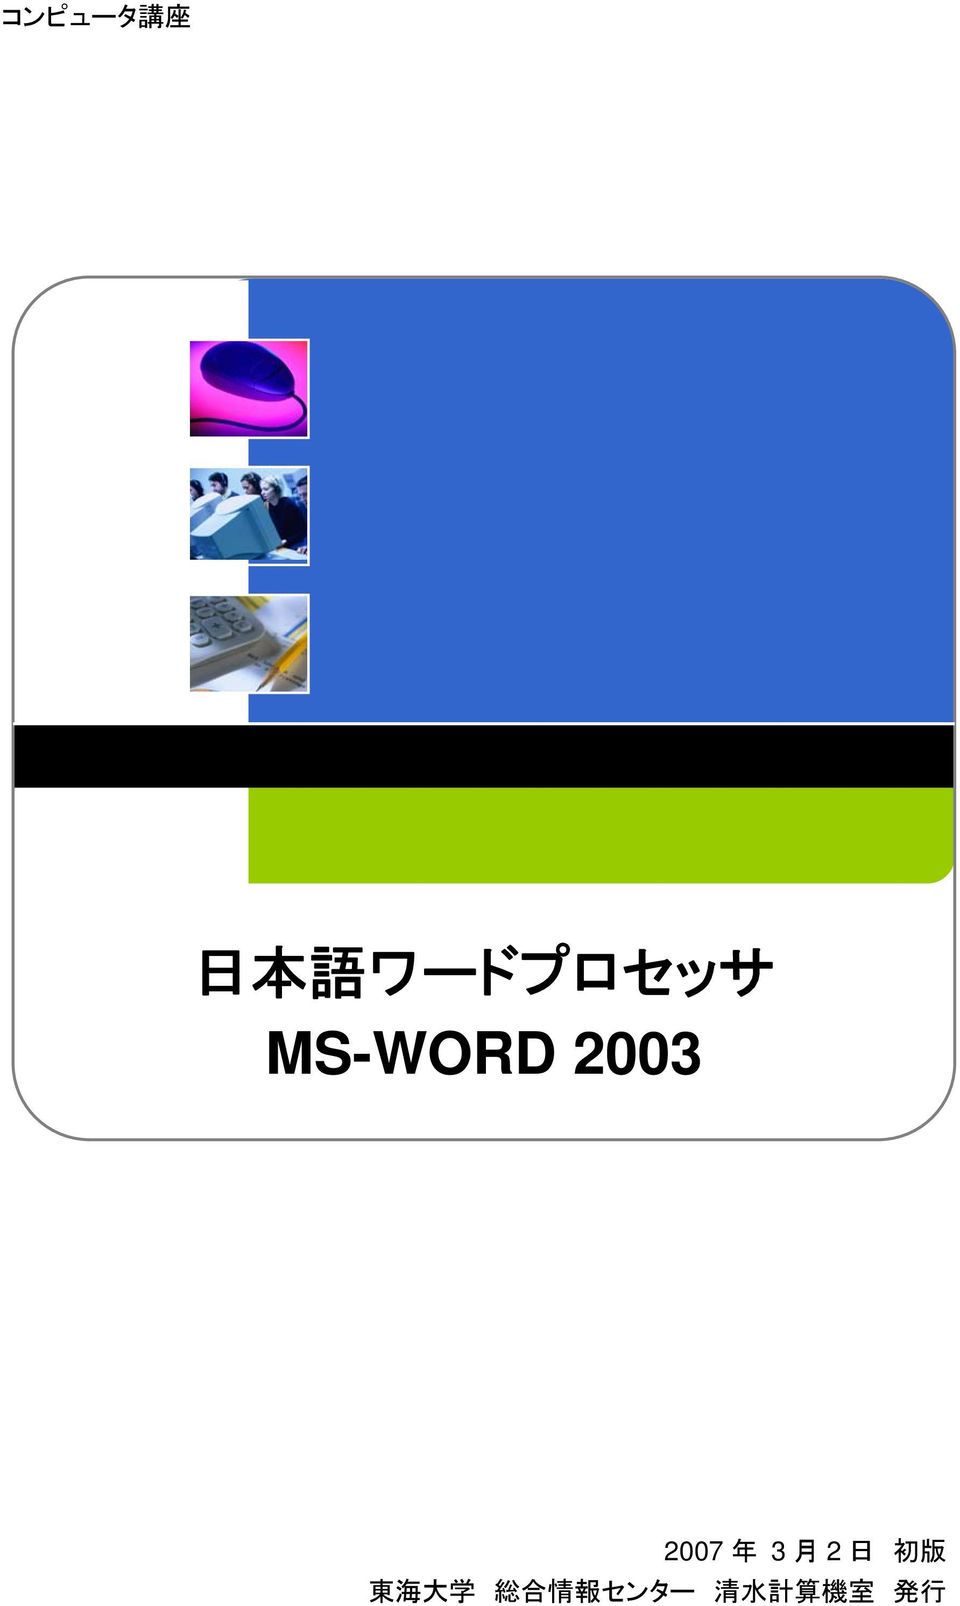 MS-WORD 2003 2007 年 3 月 2 日 初